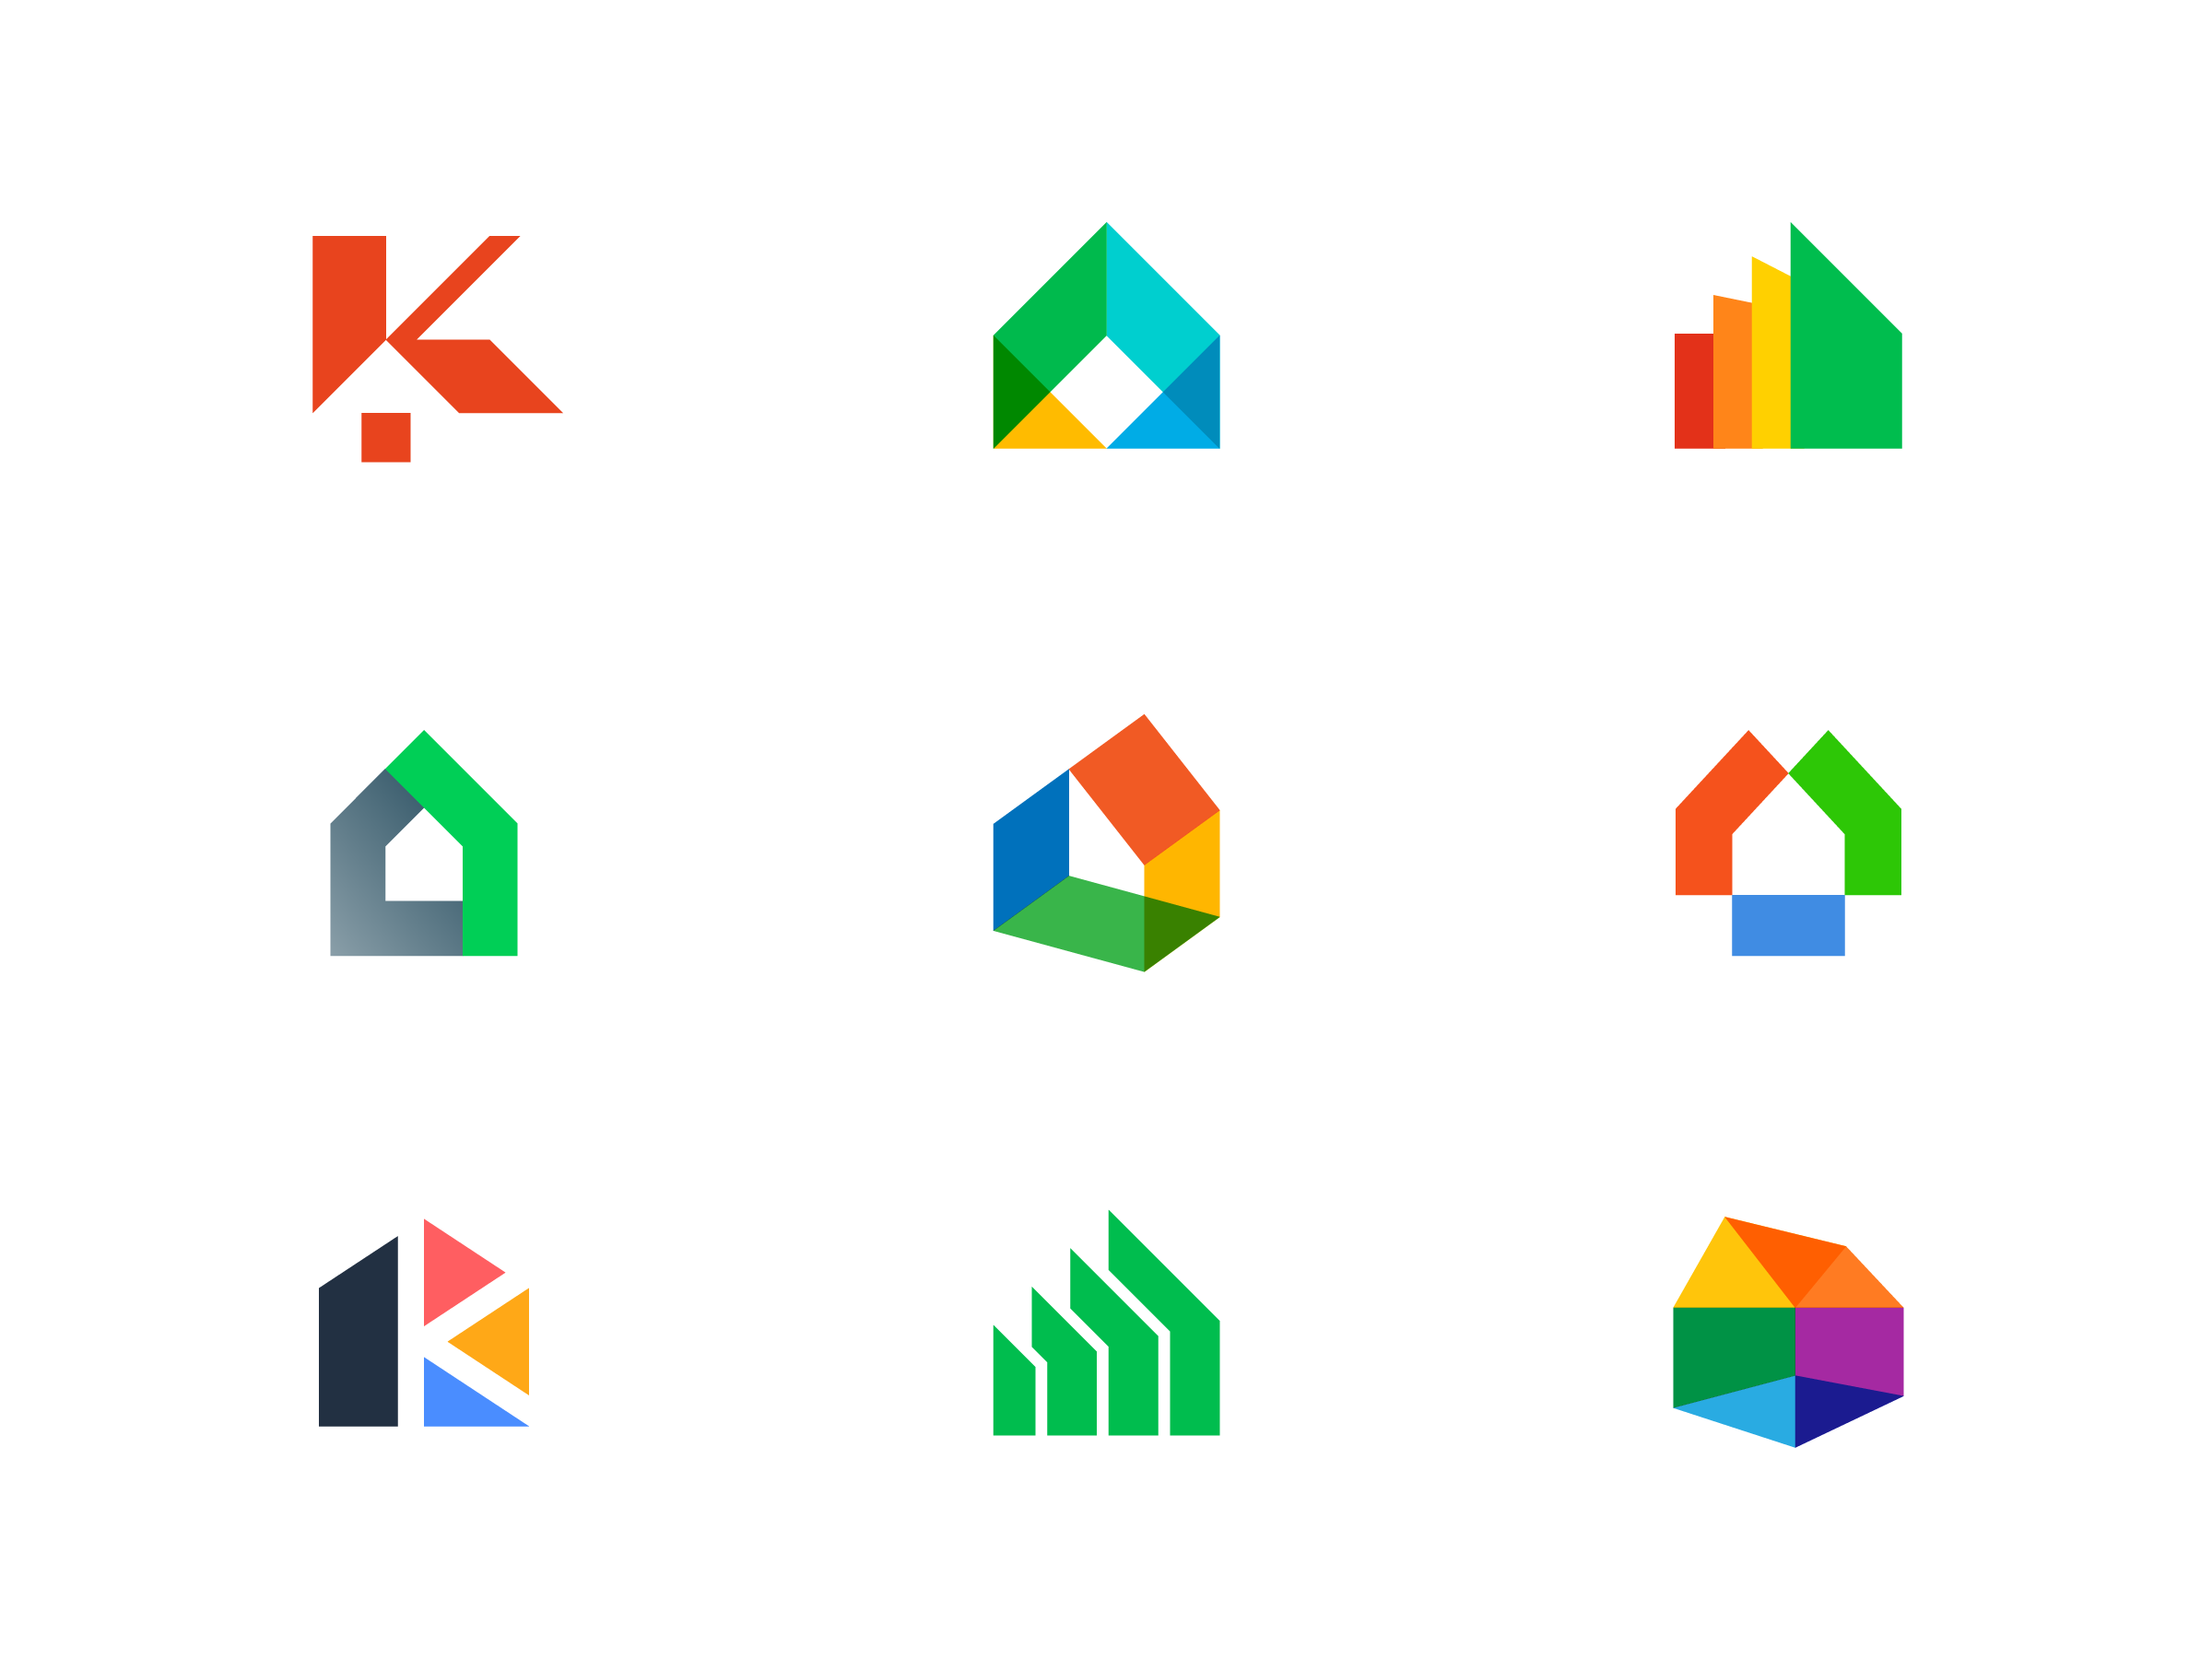 House Logos